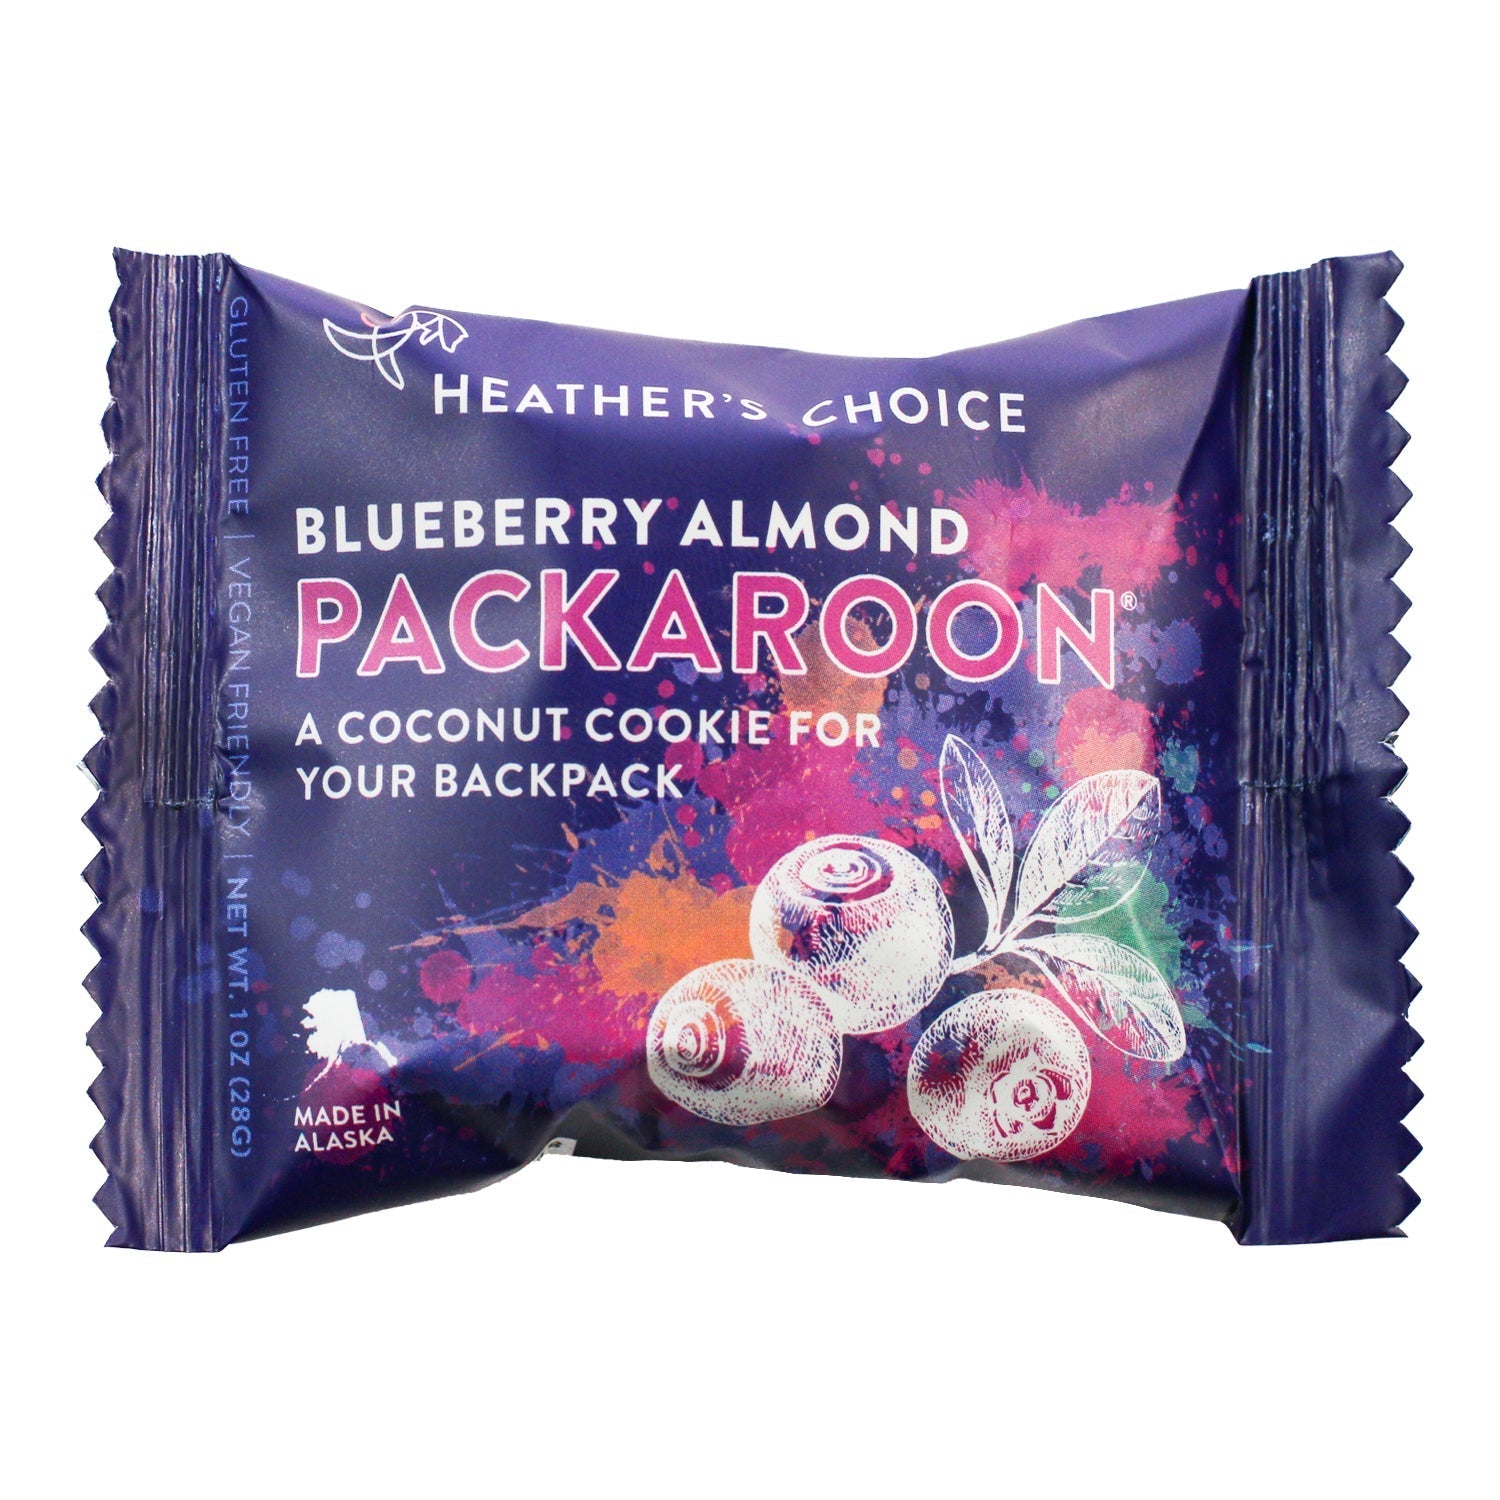 Heather's Choice Blueberry Almond Packaroon